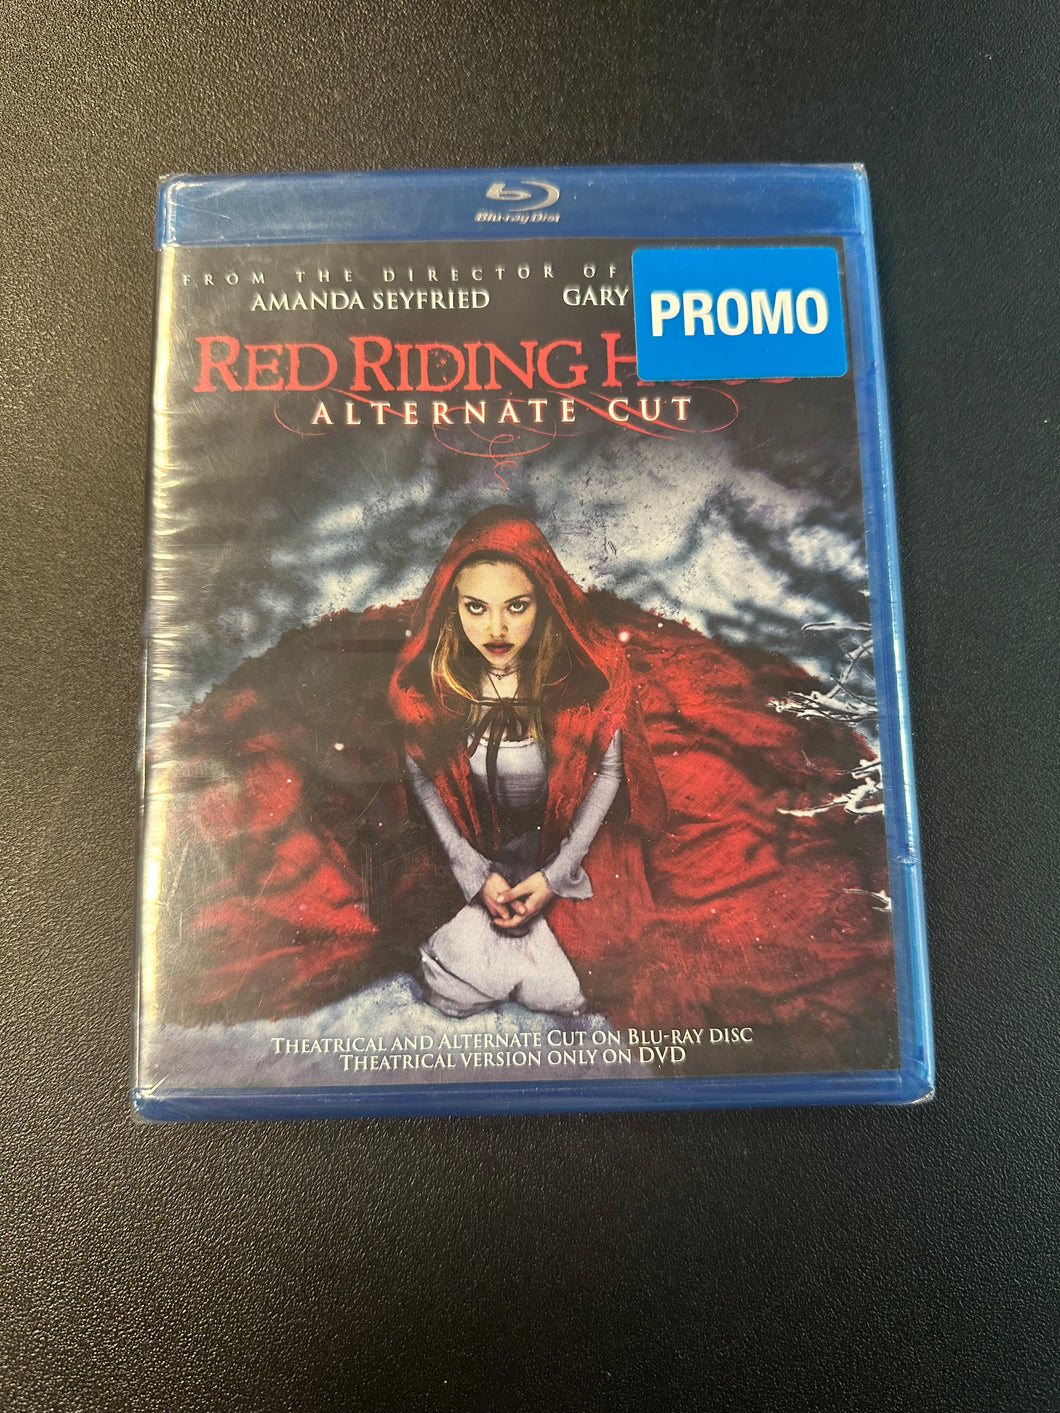 Red Riding Hood Alternate Cut [BluRay] Promo NEW Sealed